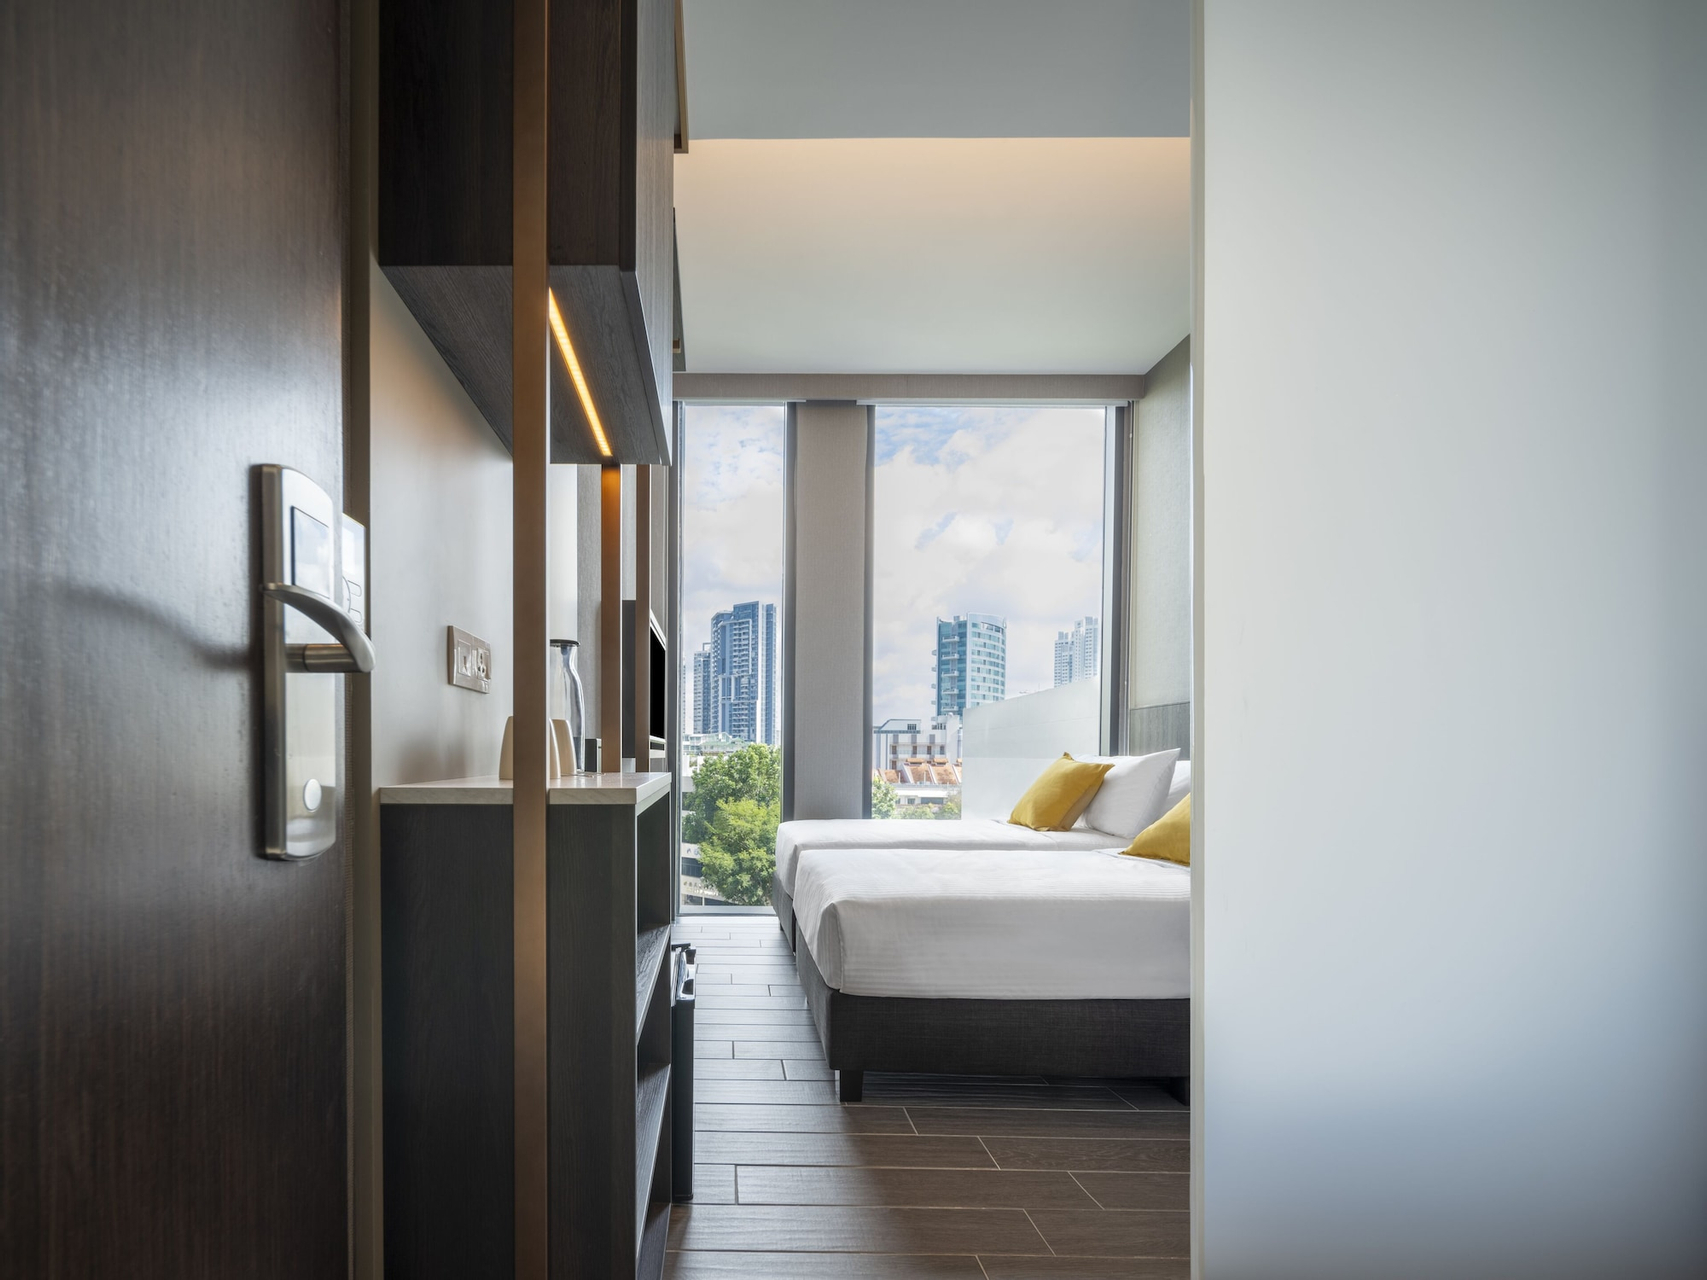 Bedroom 3, Beverly Hotels Elements, Singapura